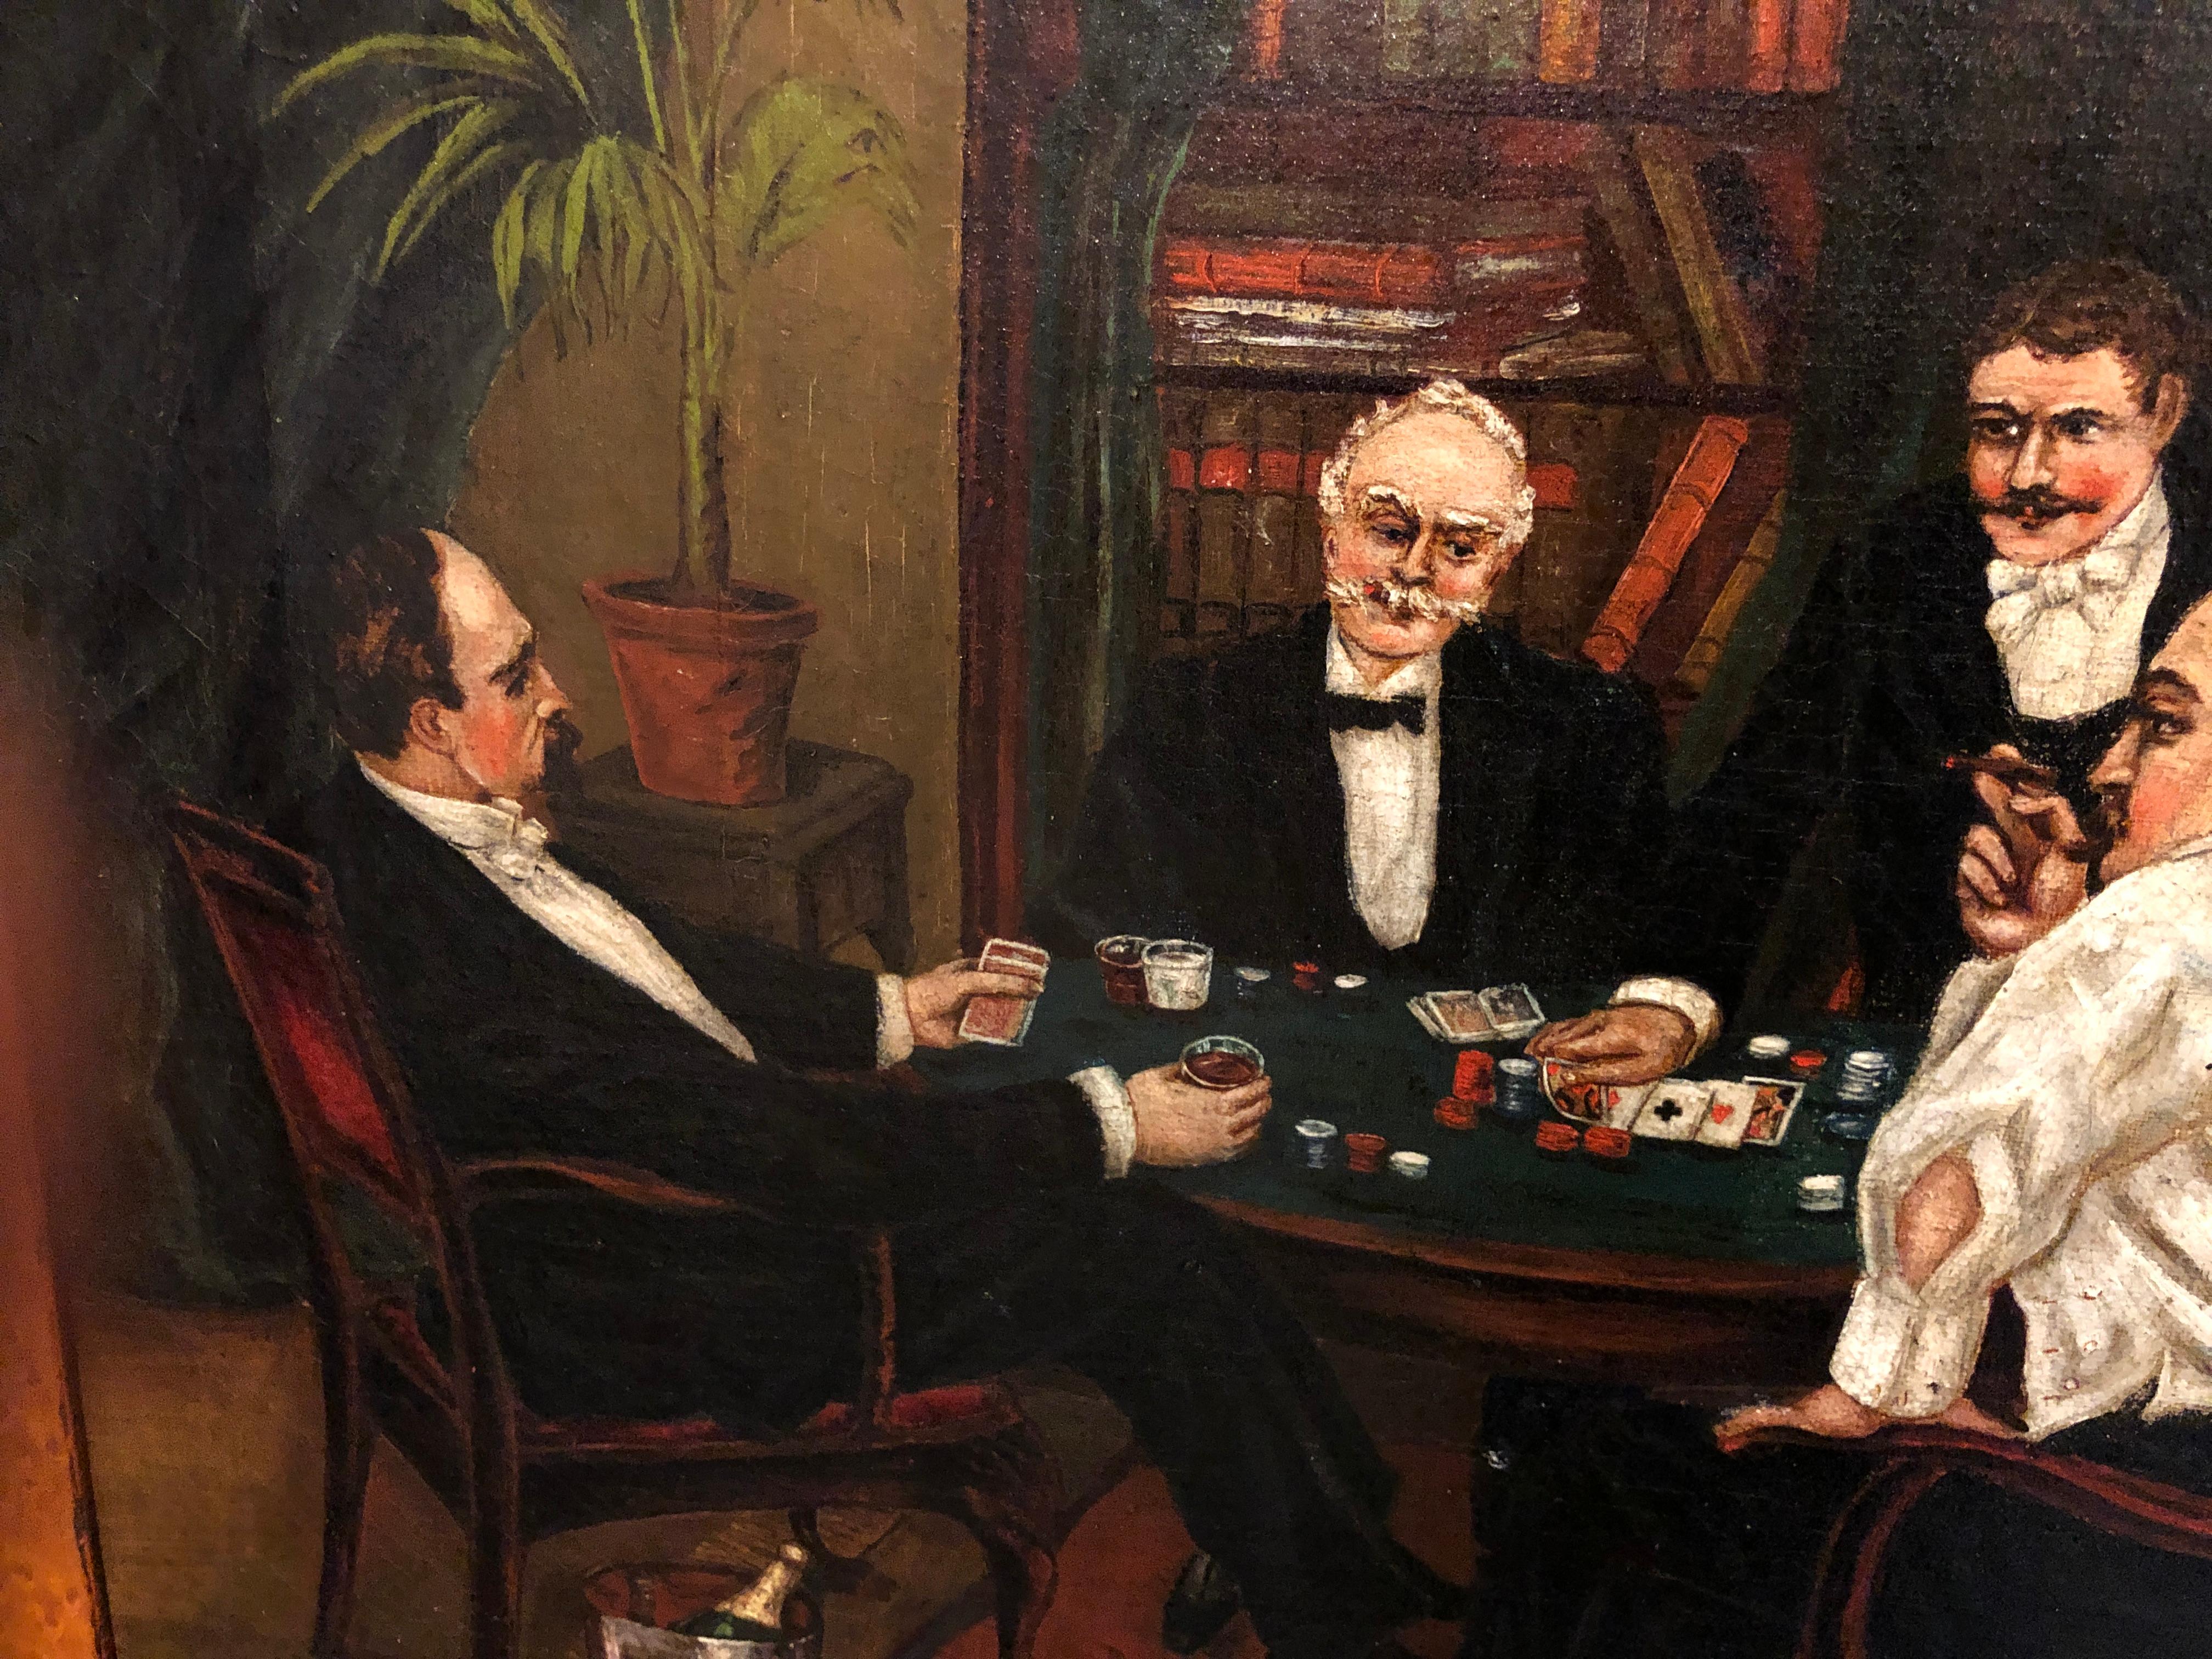 American 19th Century Painting of Men Gambling